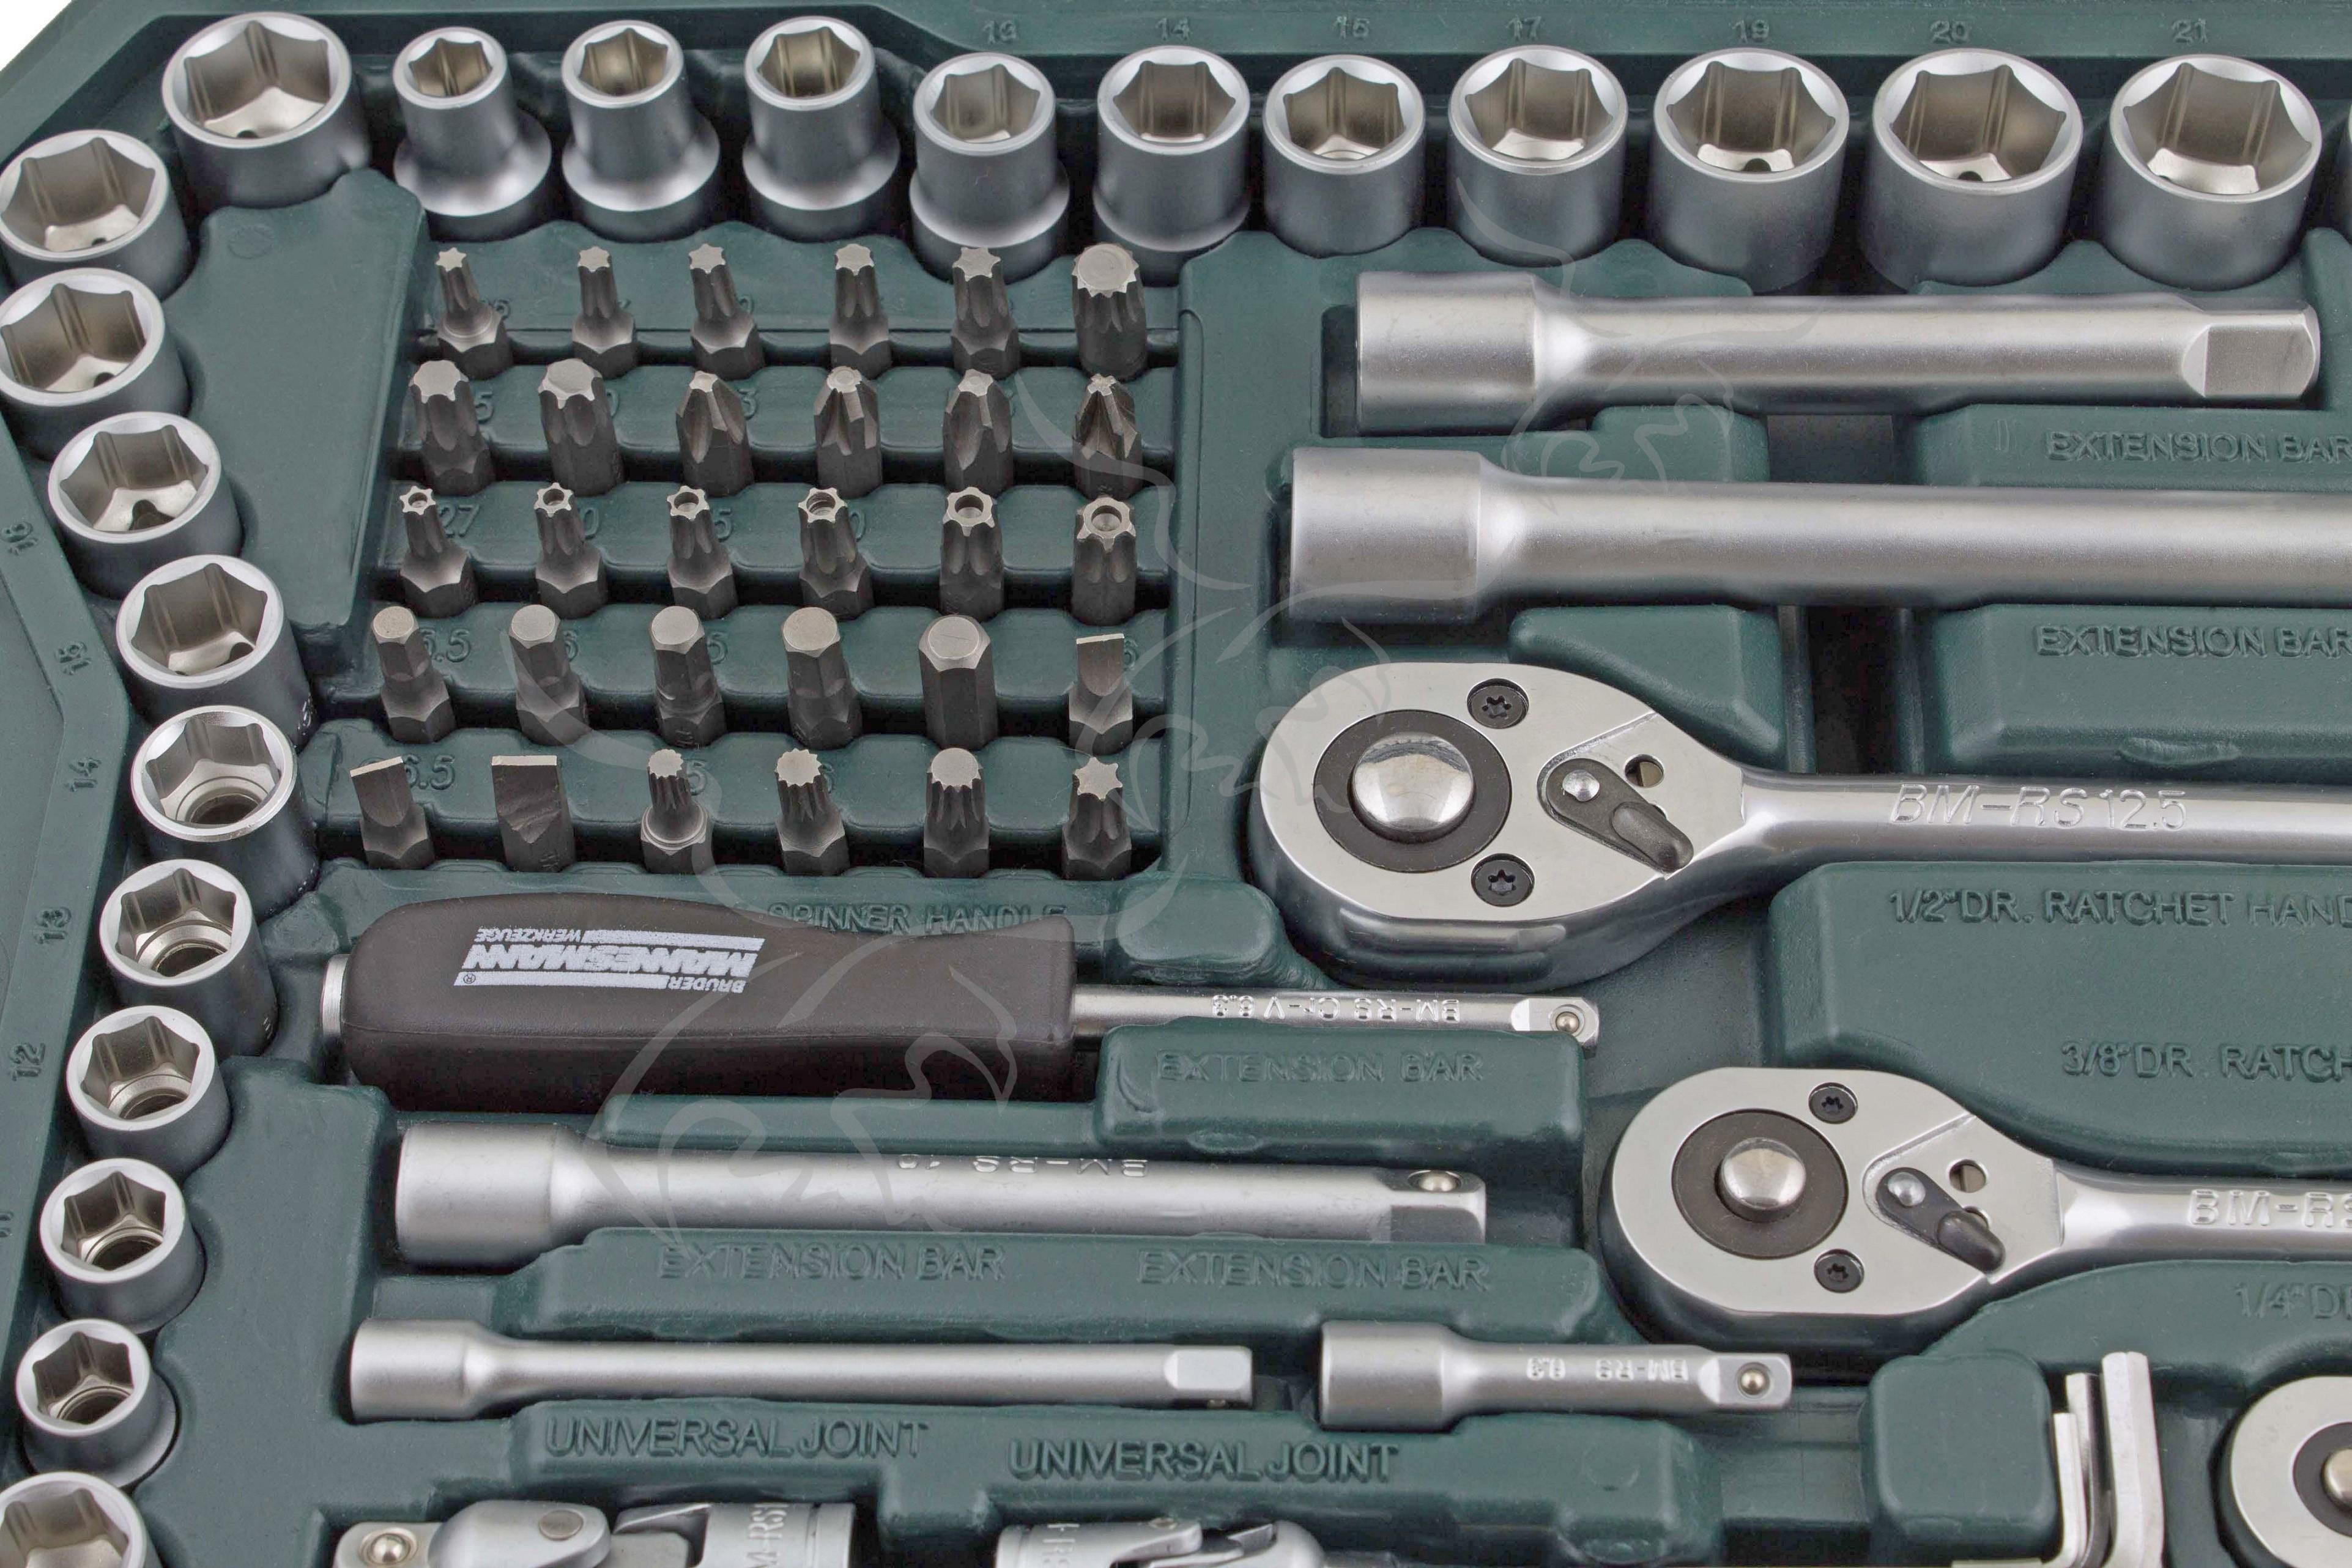 Maletín de herramientas Mannesmann 215 piezas